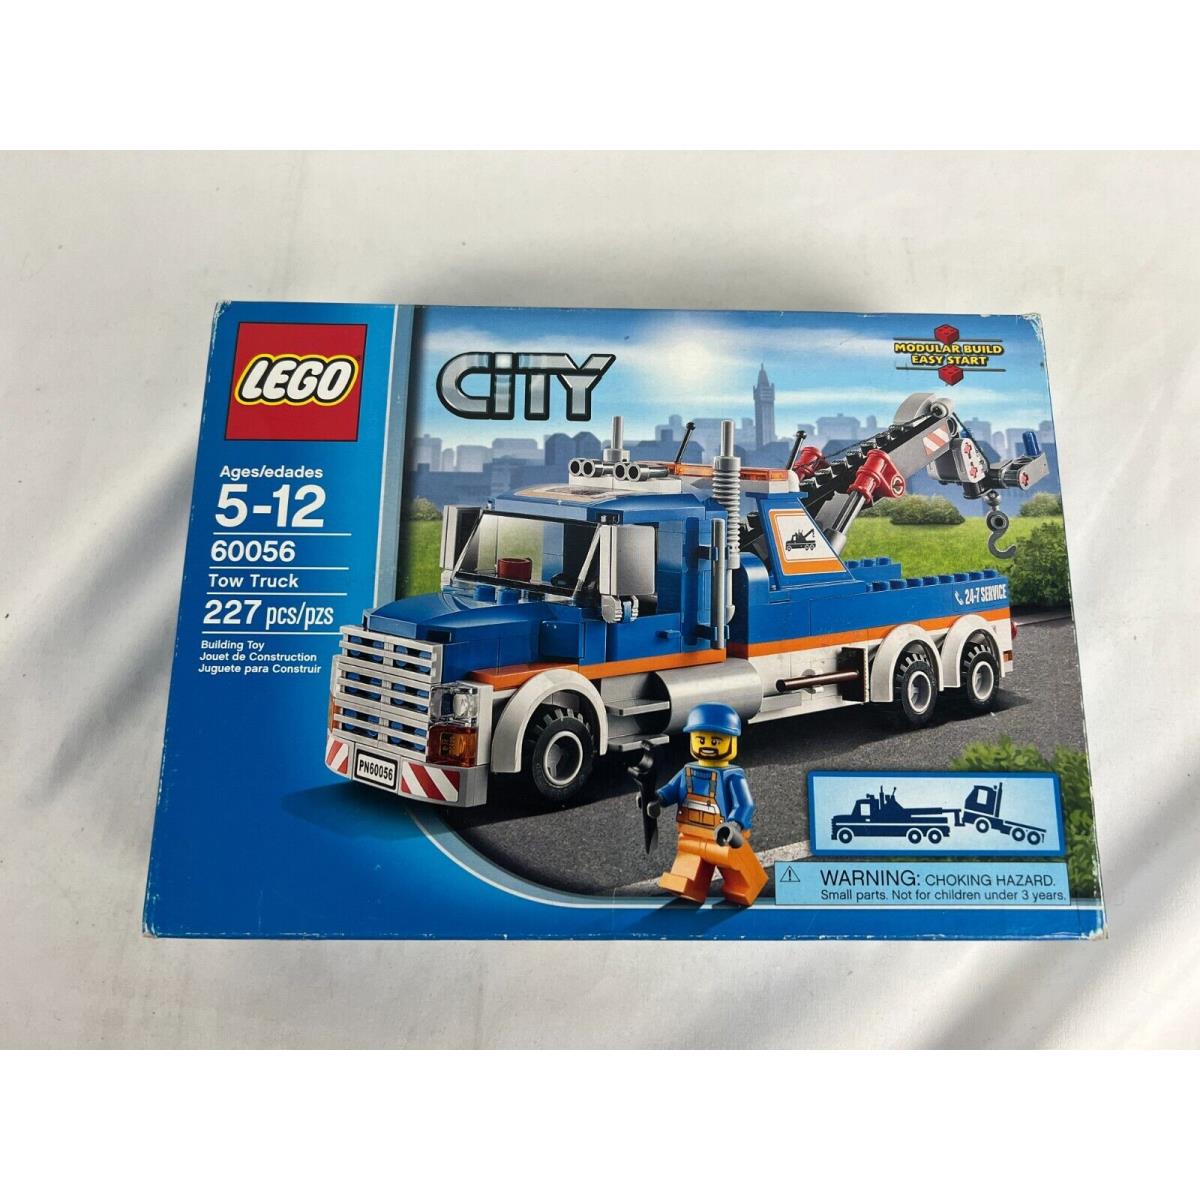 Lego City Great Vehicles 60056 Tow Truck 227 Pcs 2013 Building Set